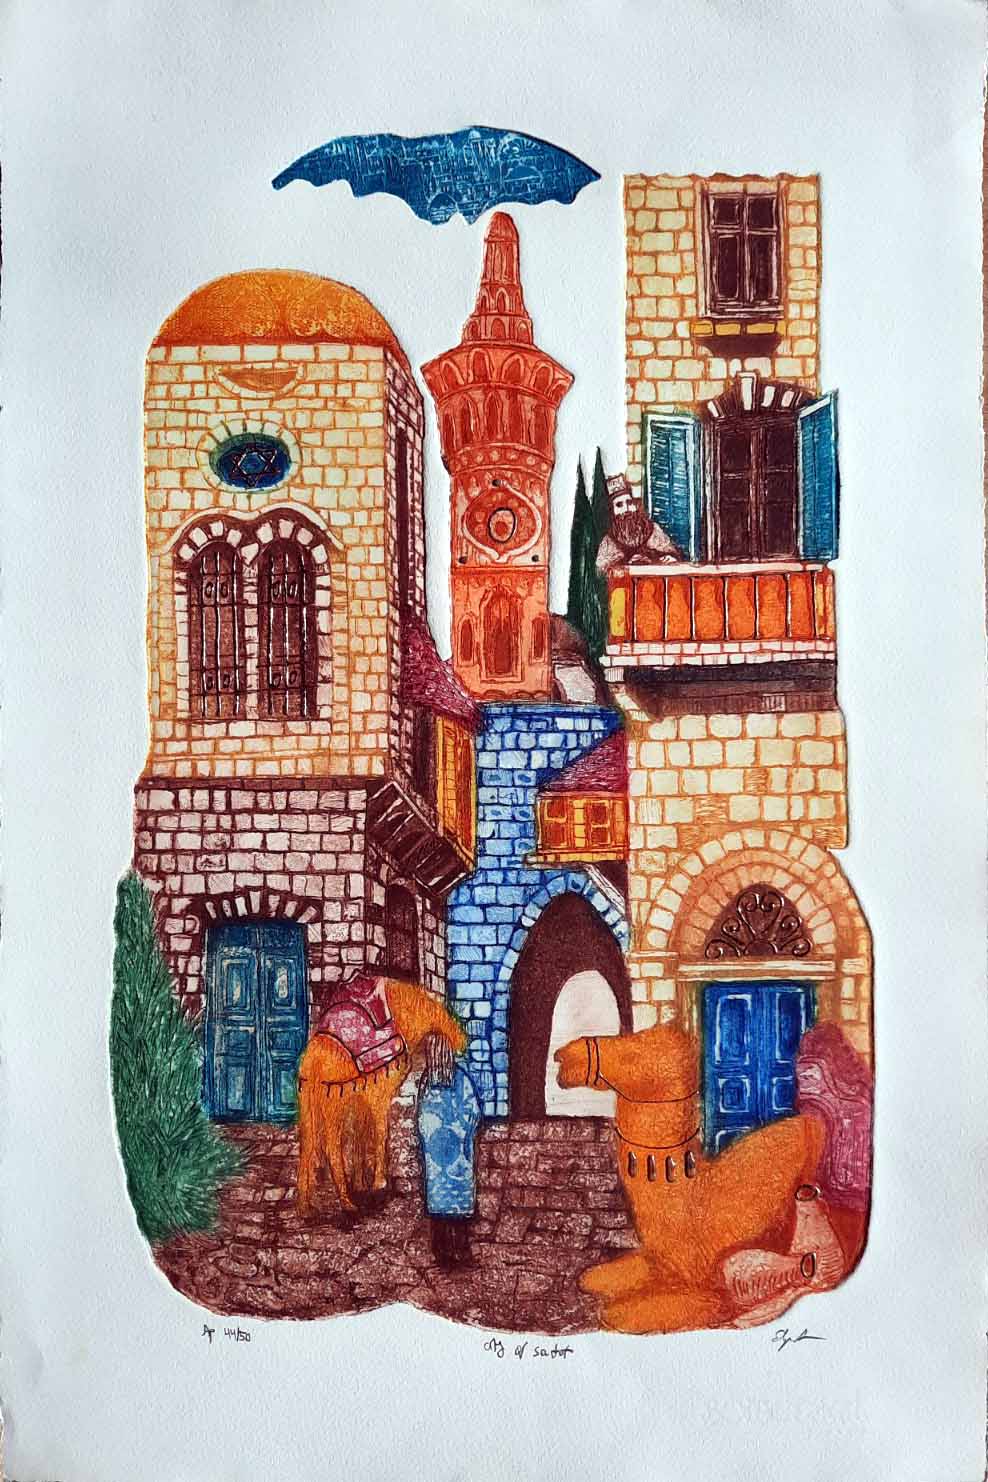 City of Safat by Amram Ebgi